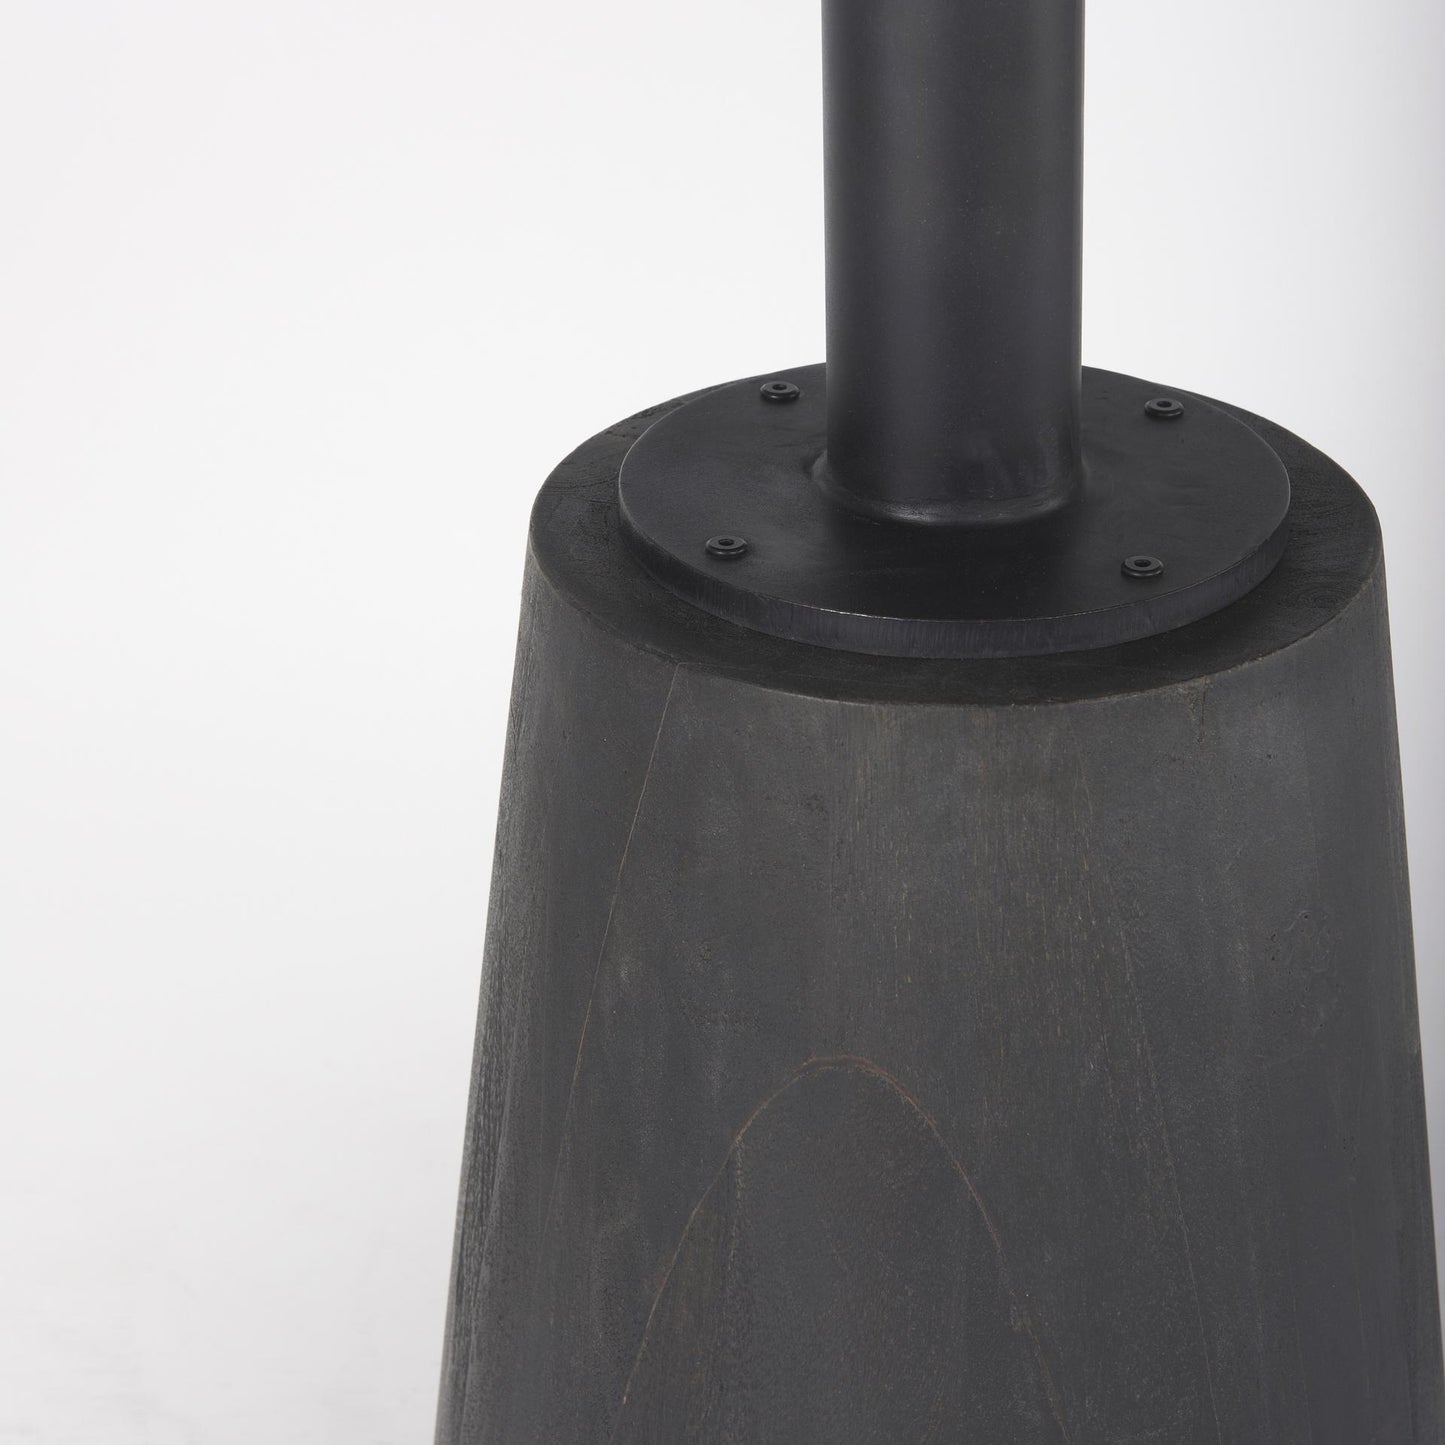 32" Round Black-Brown Wood Tabletop & Base w/ Black Metal Accent Pedestal Bistro Table